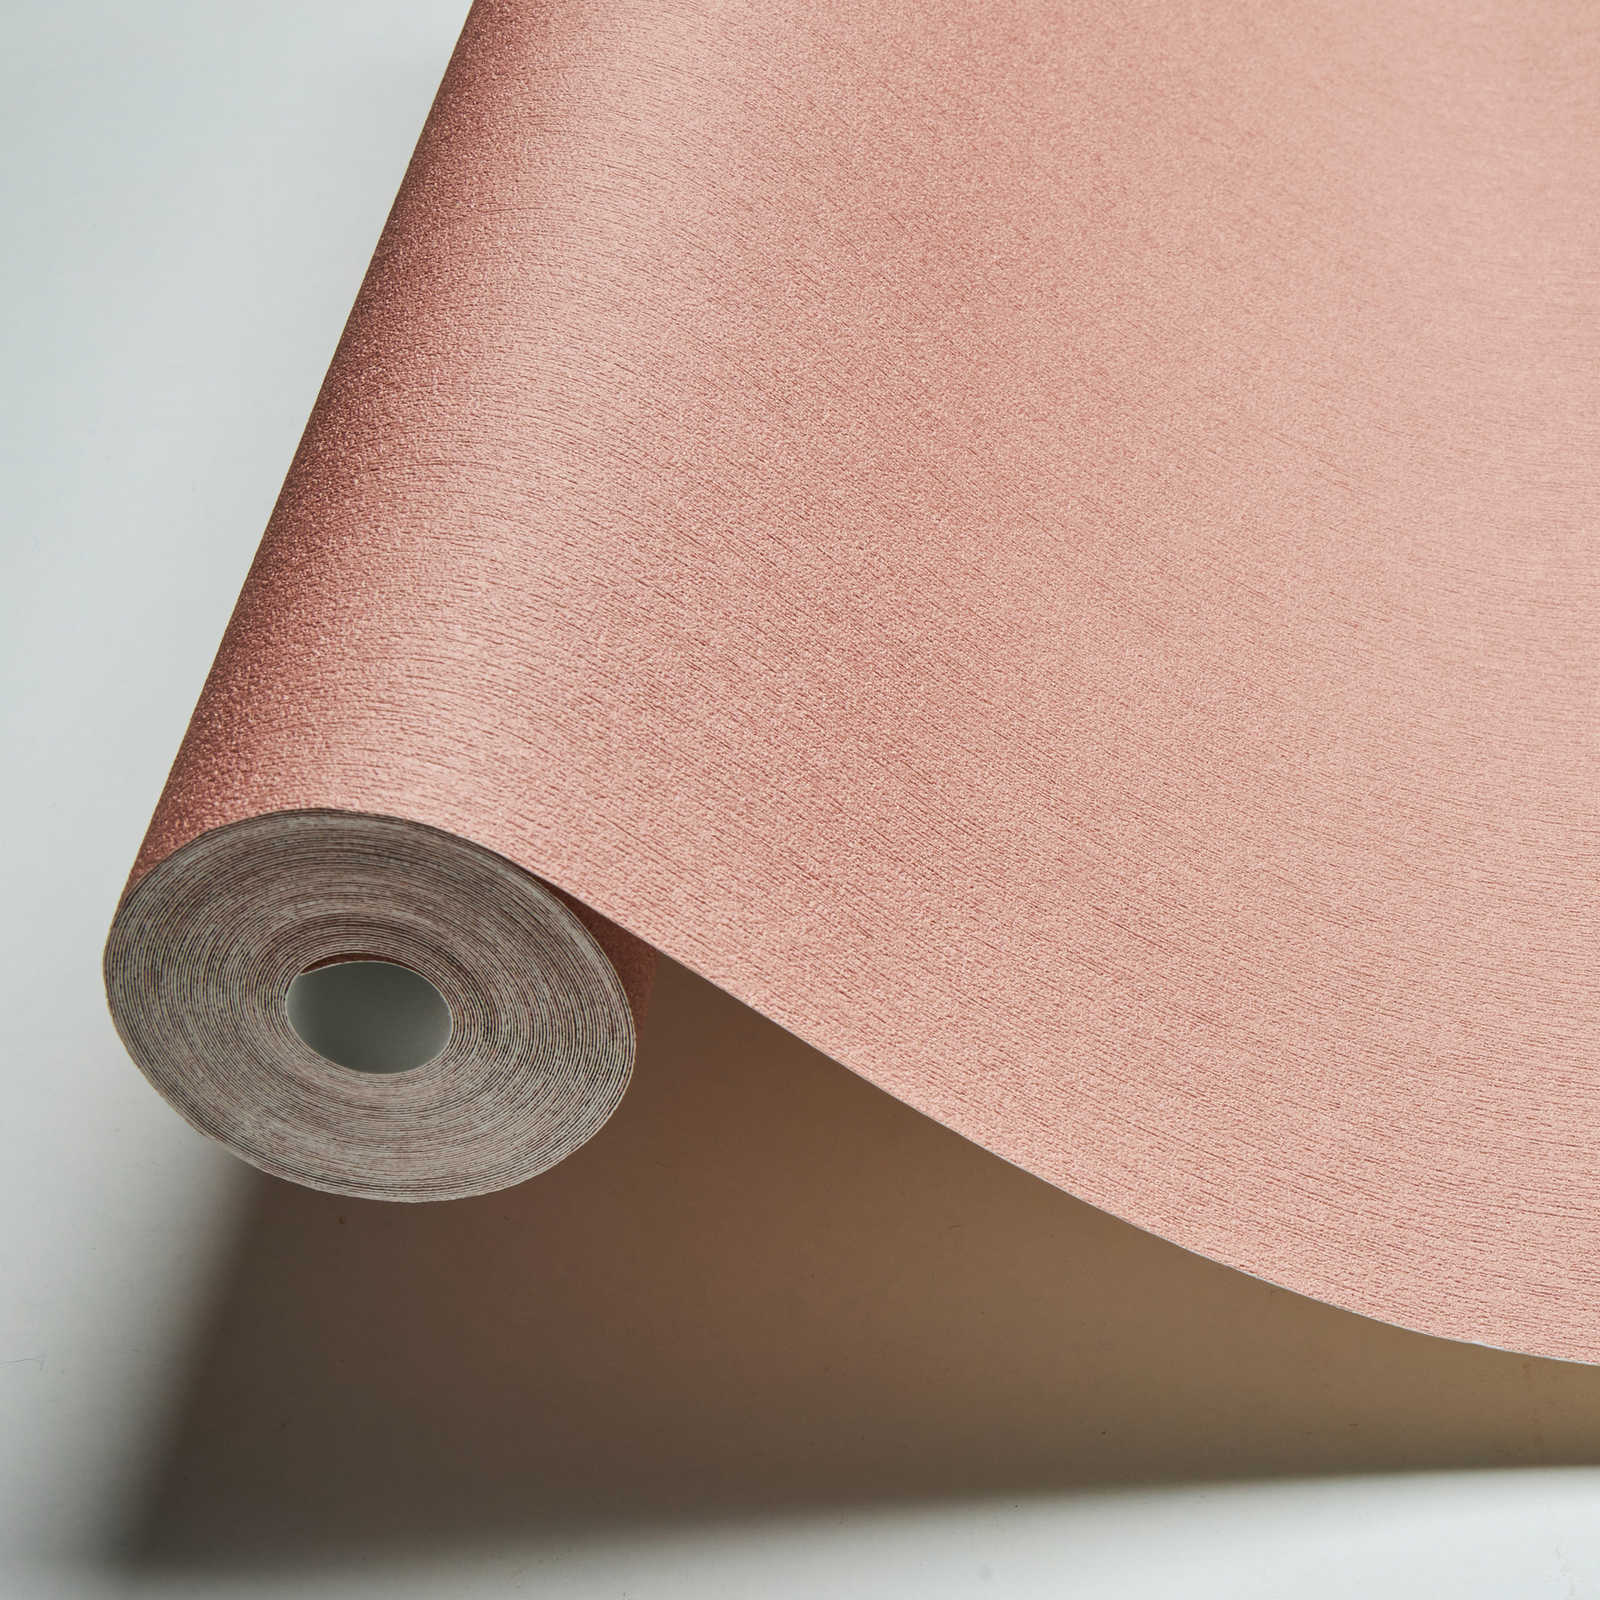             Karl LAGERFELD non-woven wallpaper plain & texture - copper
        